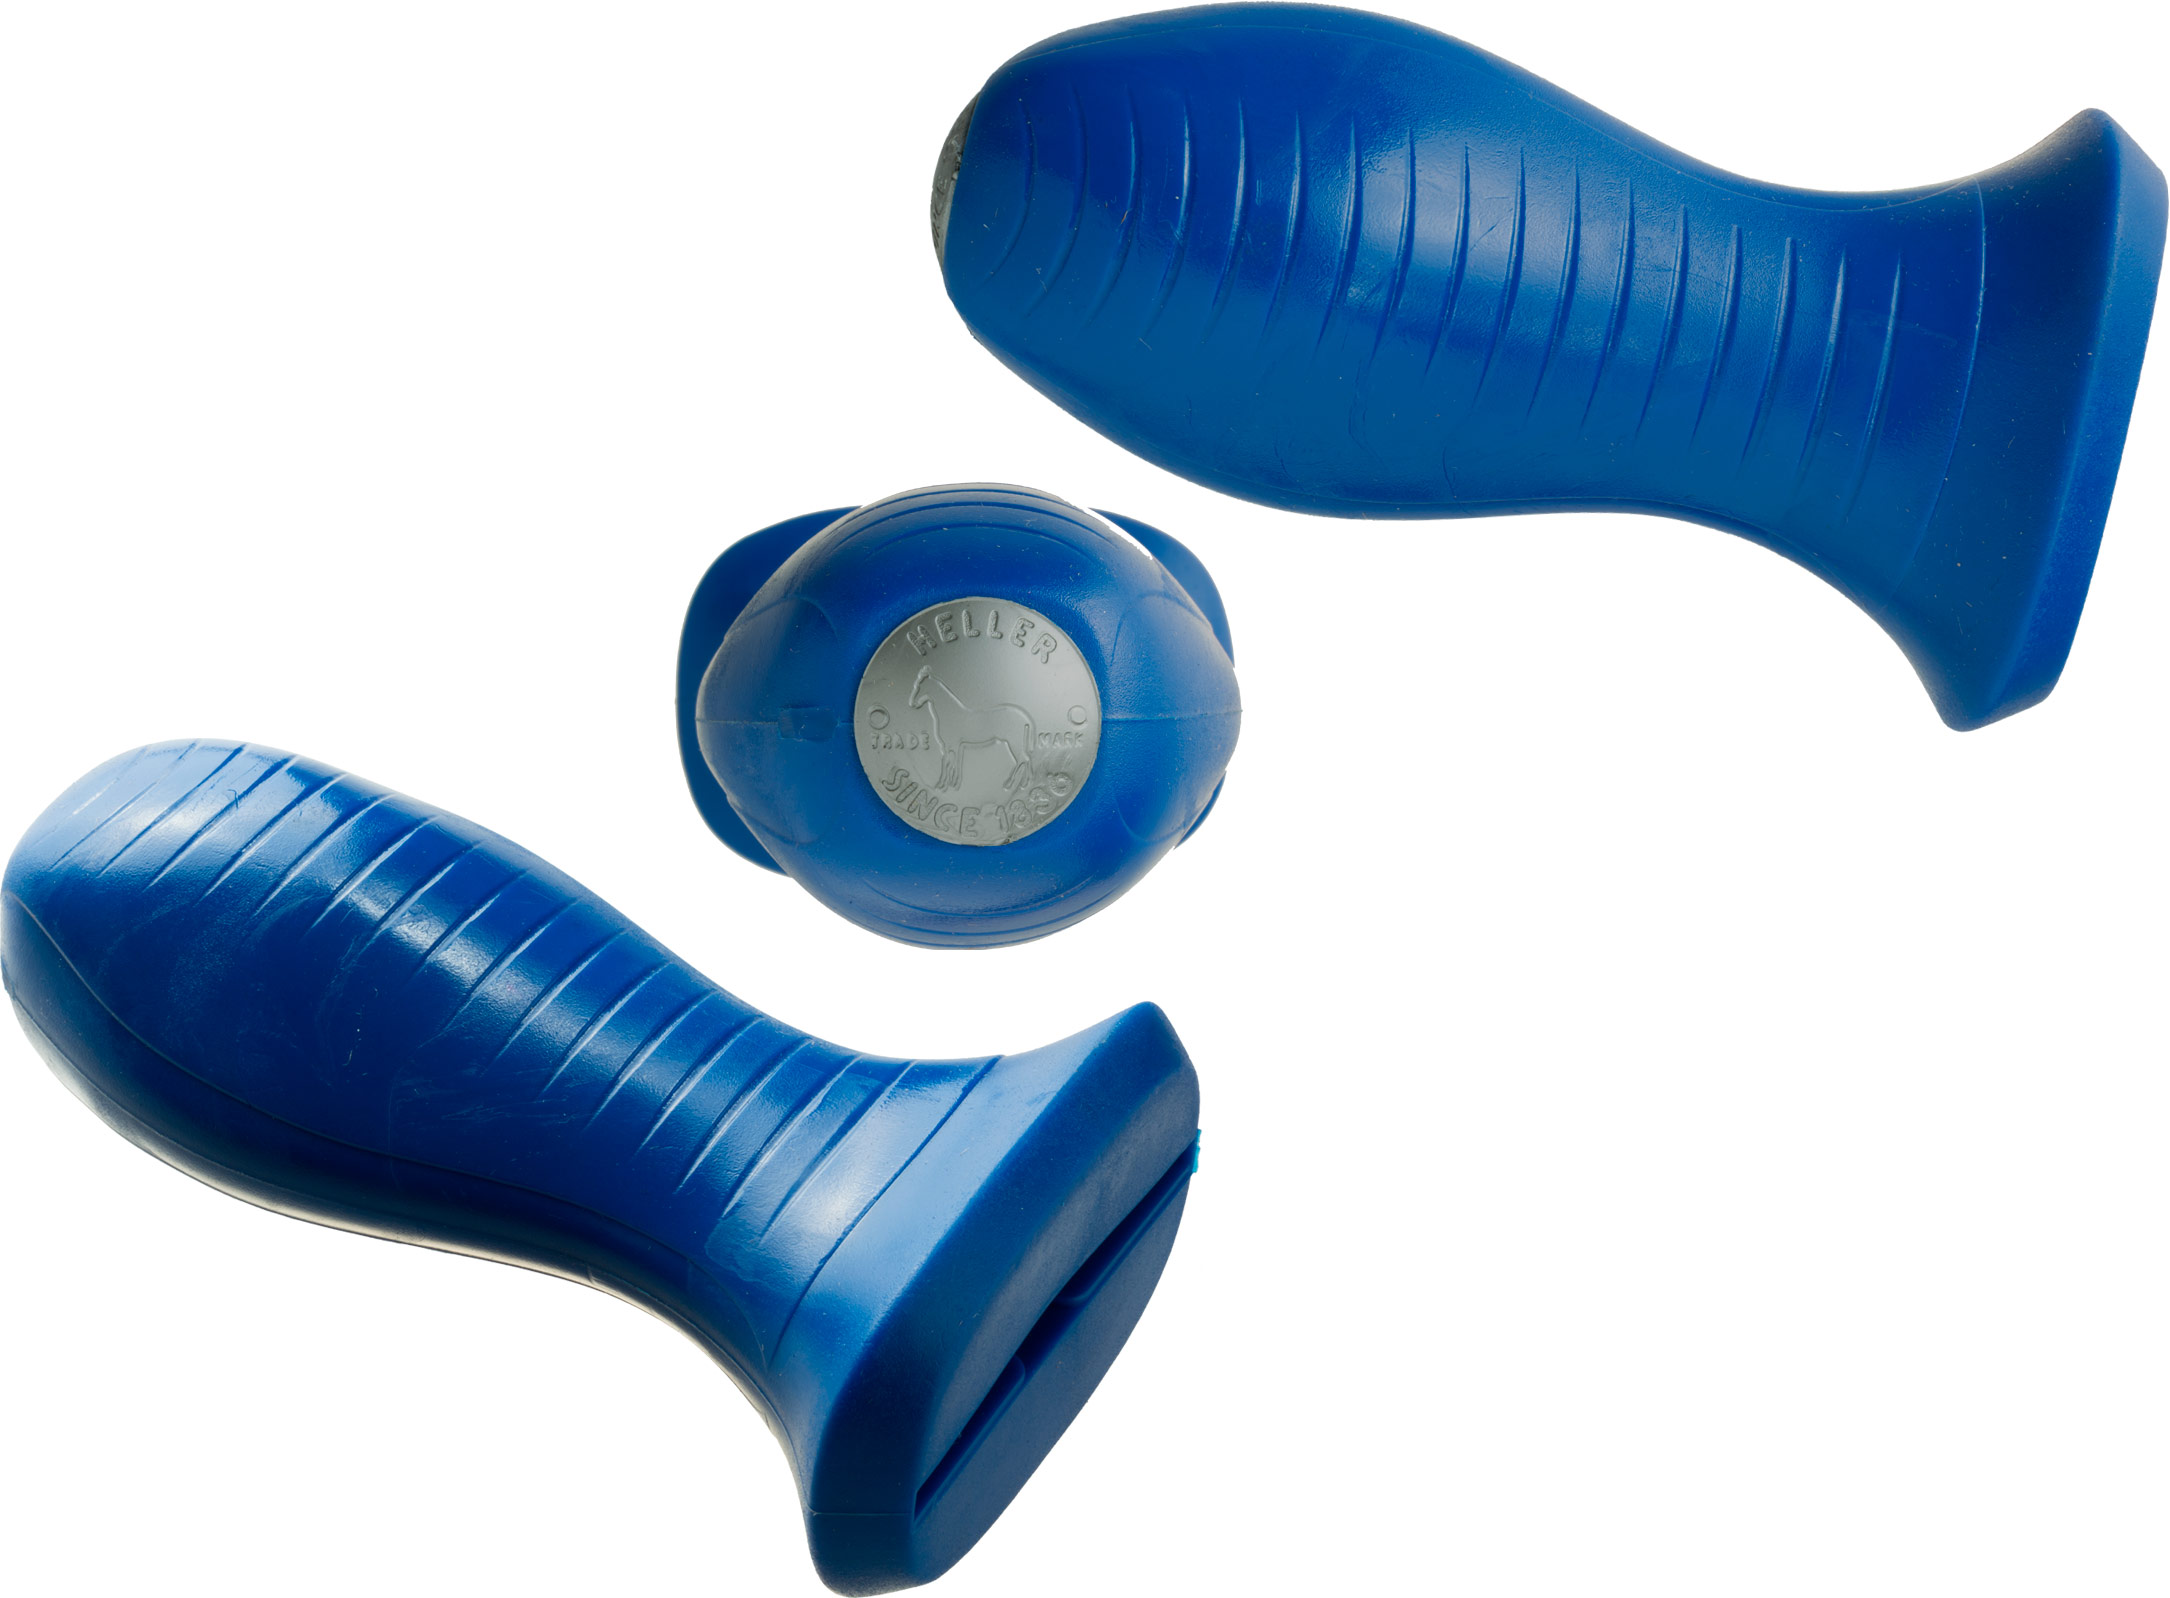 Heller rasp handle GRIP blue, for eXceL rasps